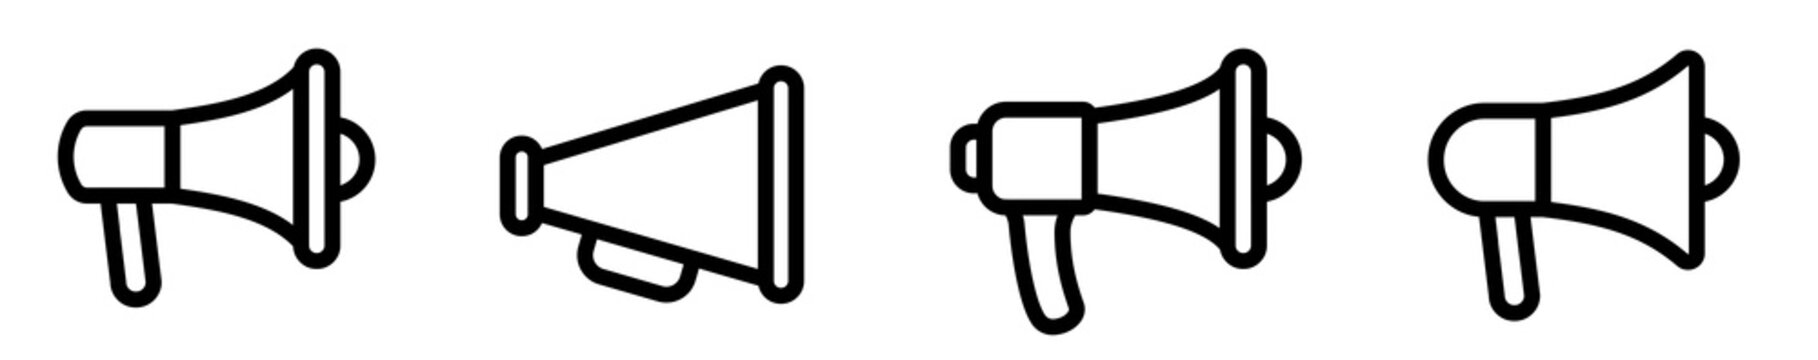 Megaphone icon set. Volume symbol. Megaphone different design icon collection.Flat design.Vector